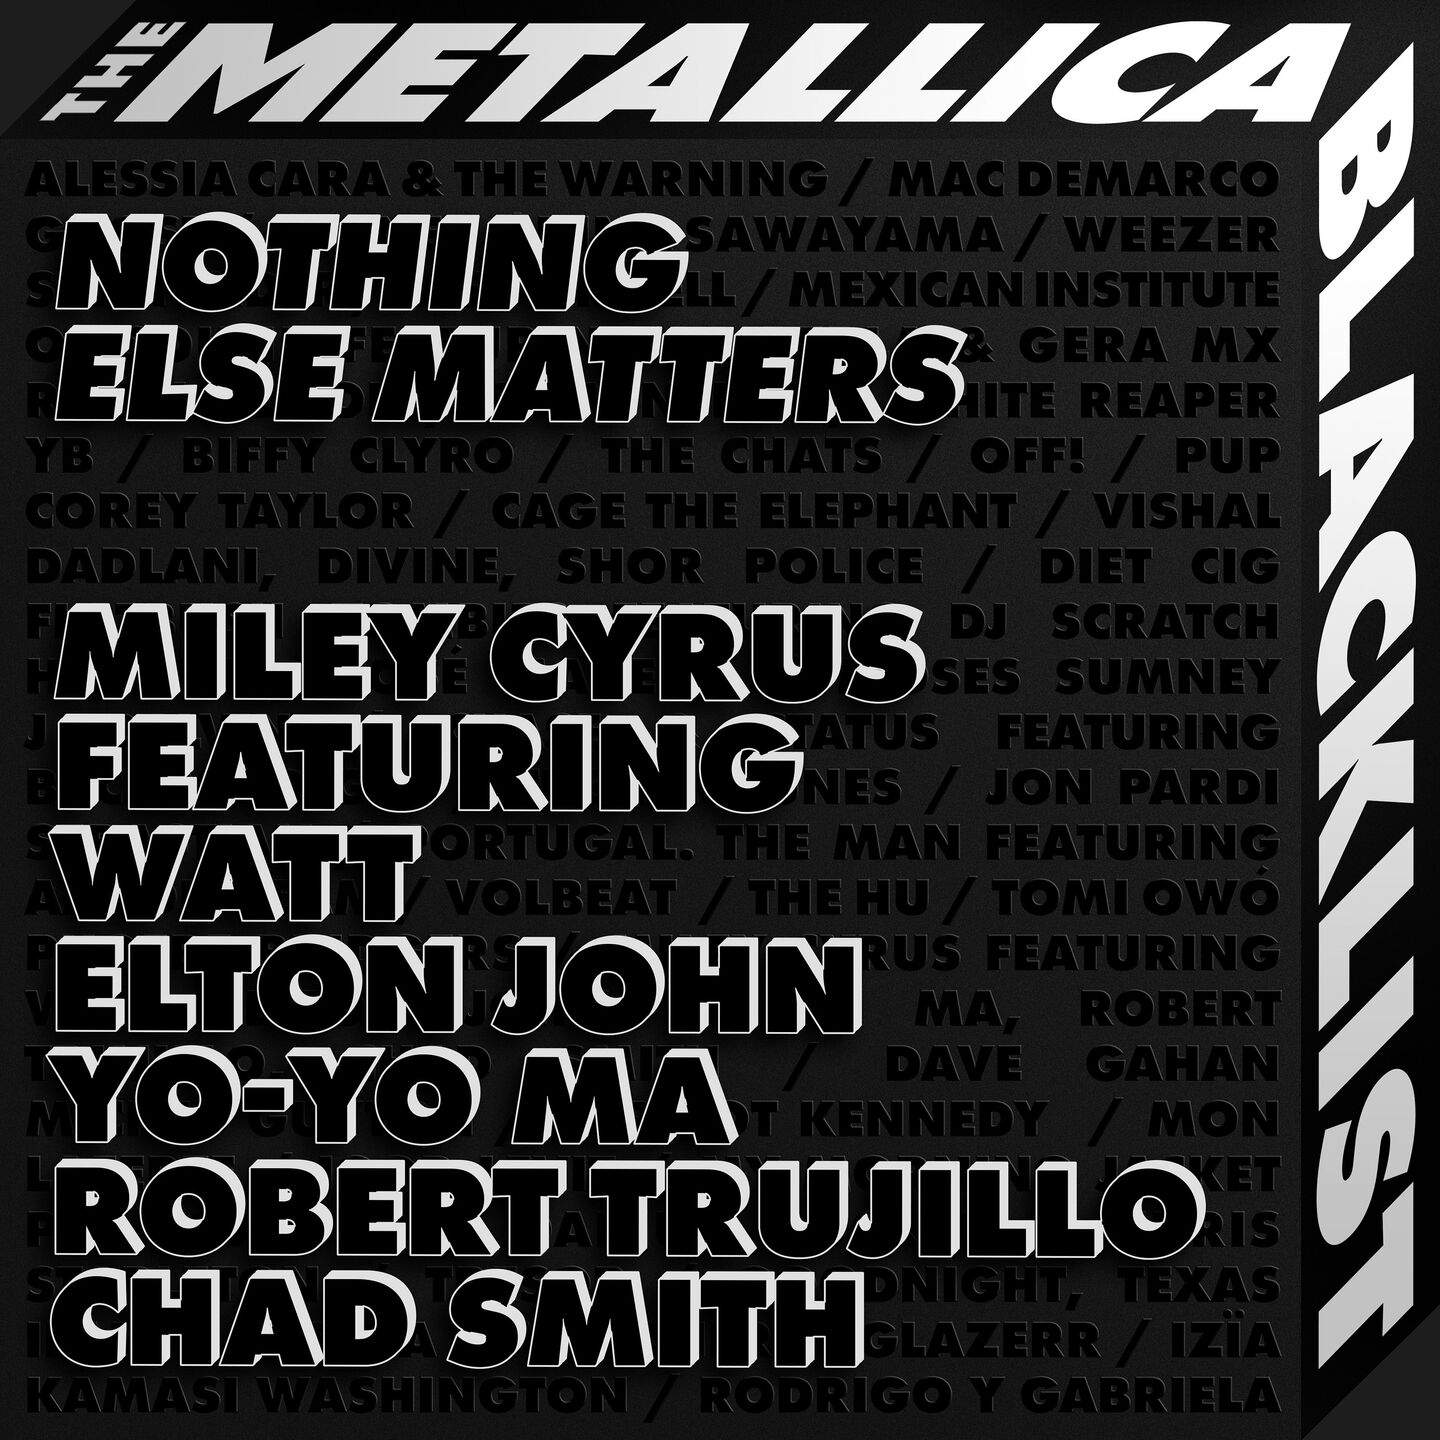 Nothing Else Matters feat. WATT, Elton John, Yo-Yo Ma, Robert Trujillo & Chad Smith -
                    Luxe radio